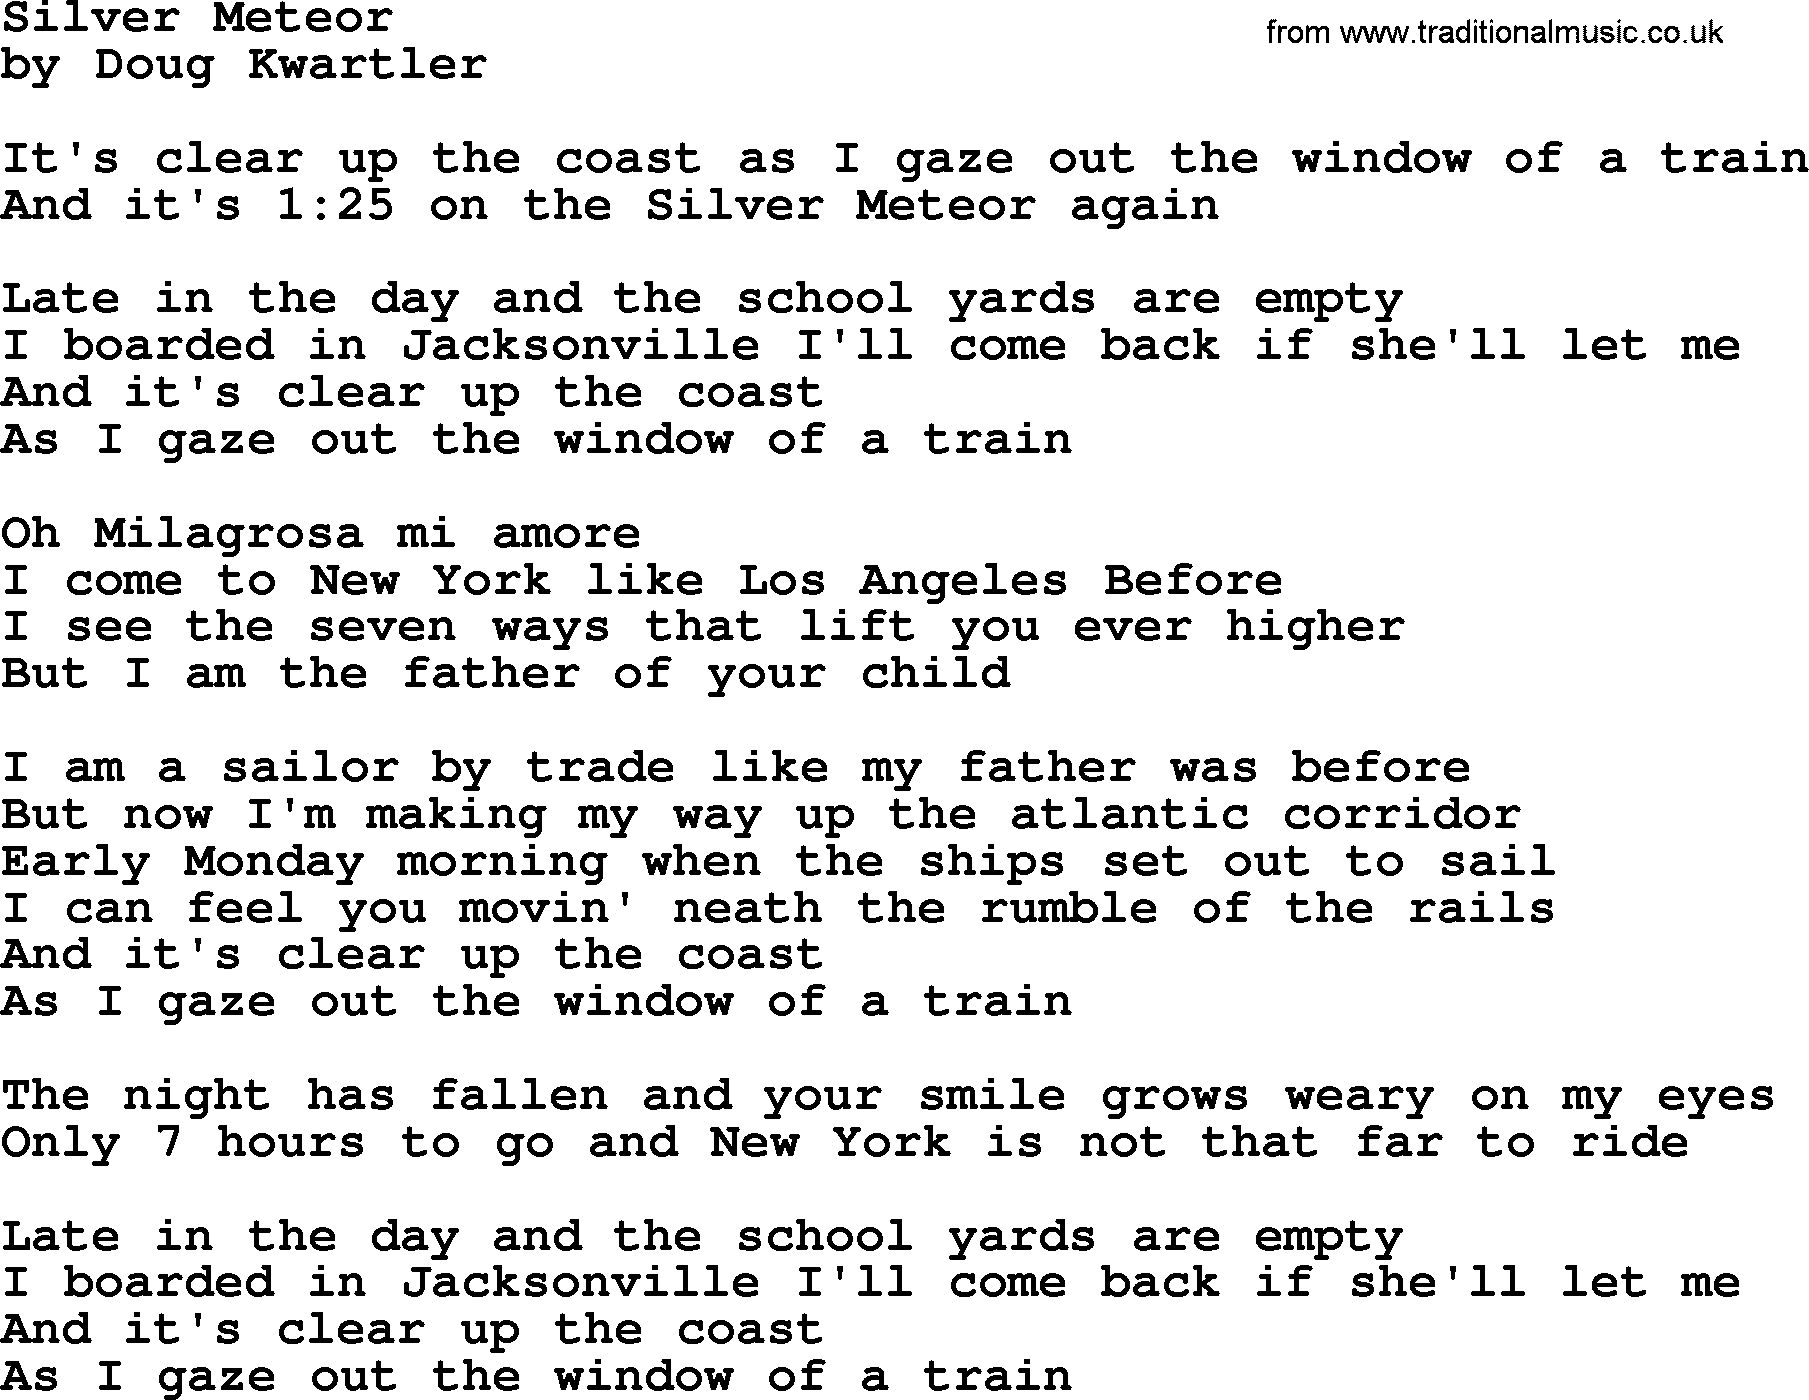 The Byrds song Silver Meteor, lyrics